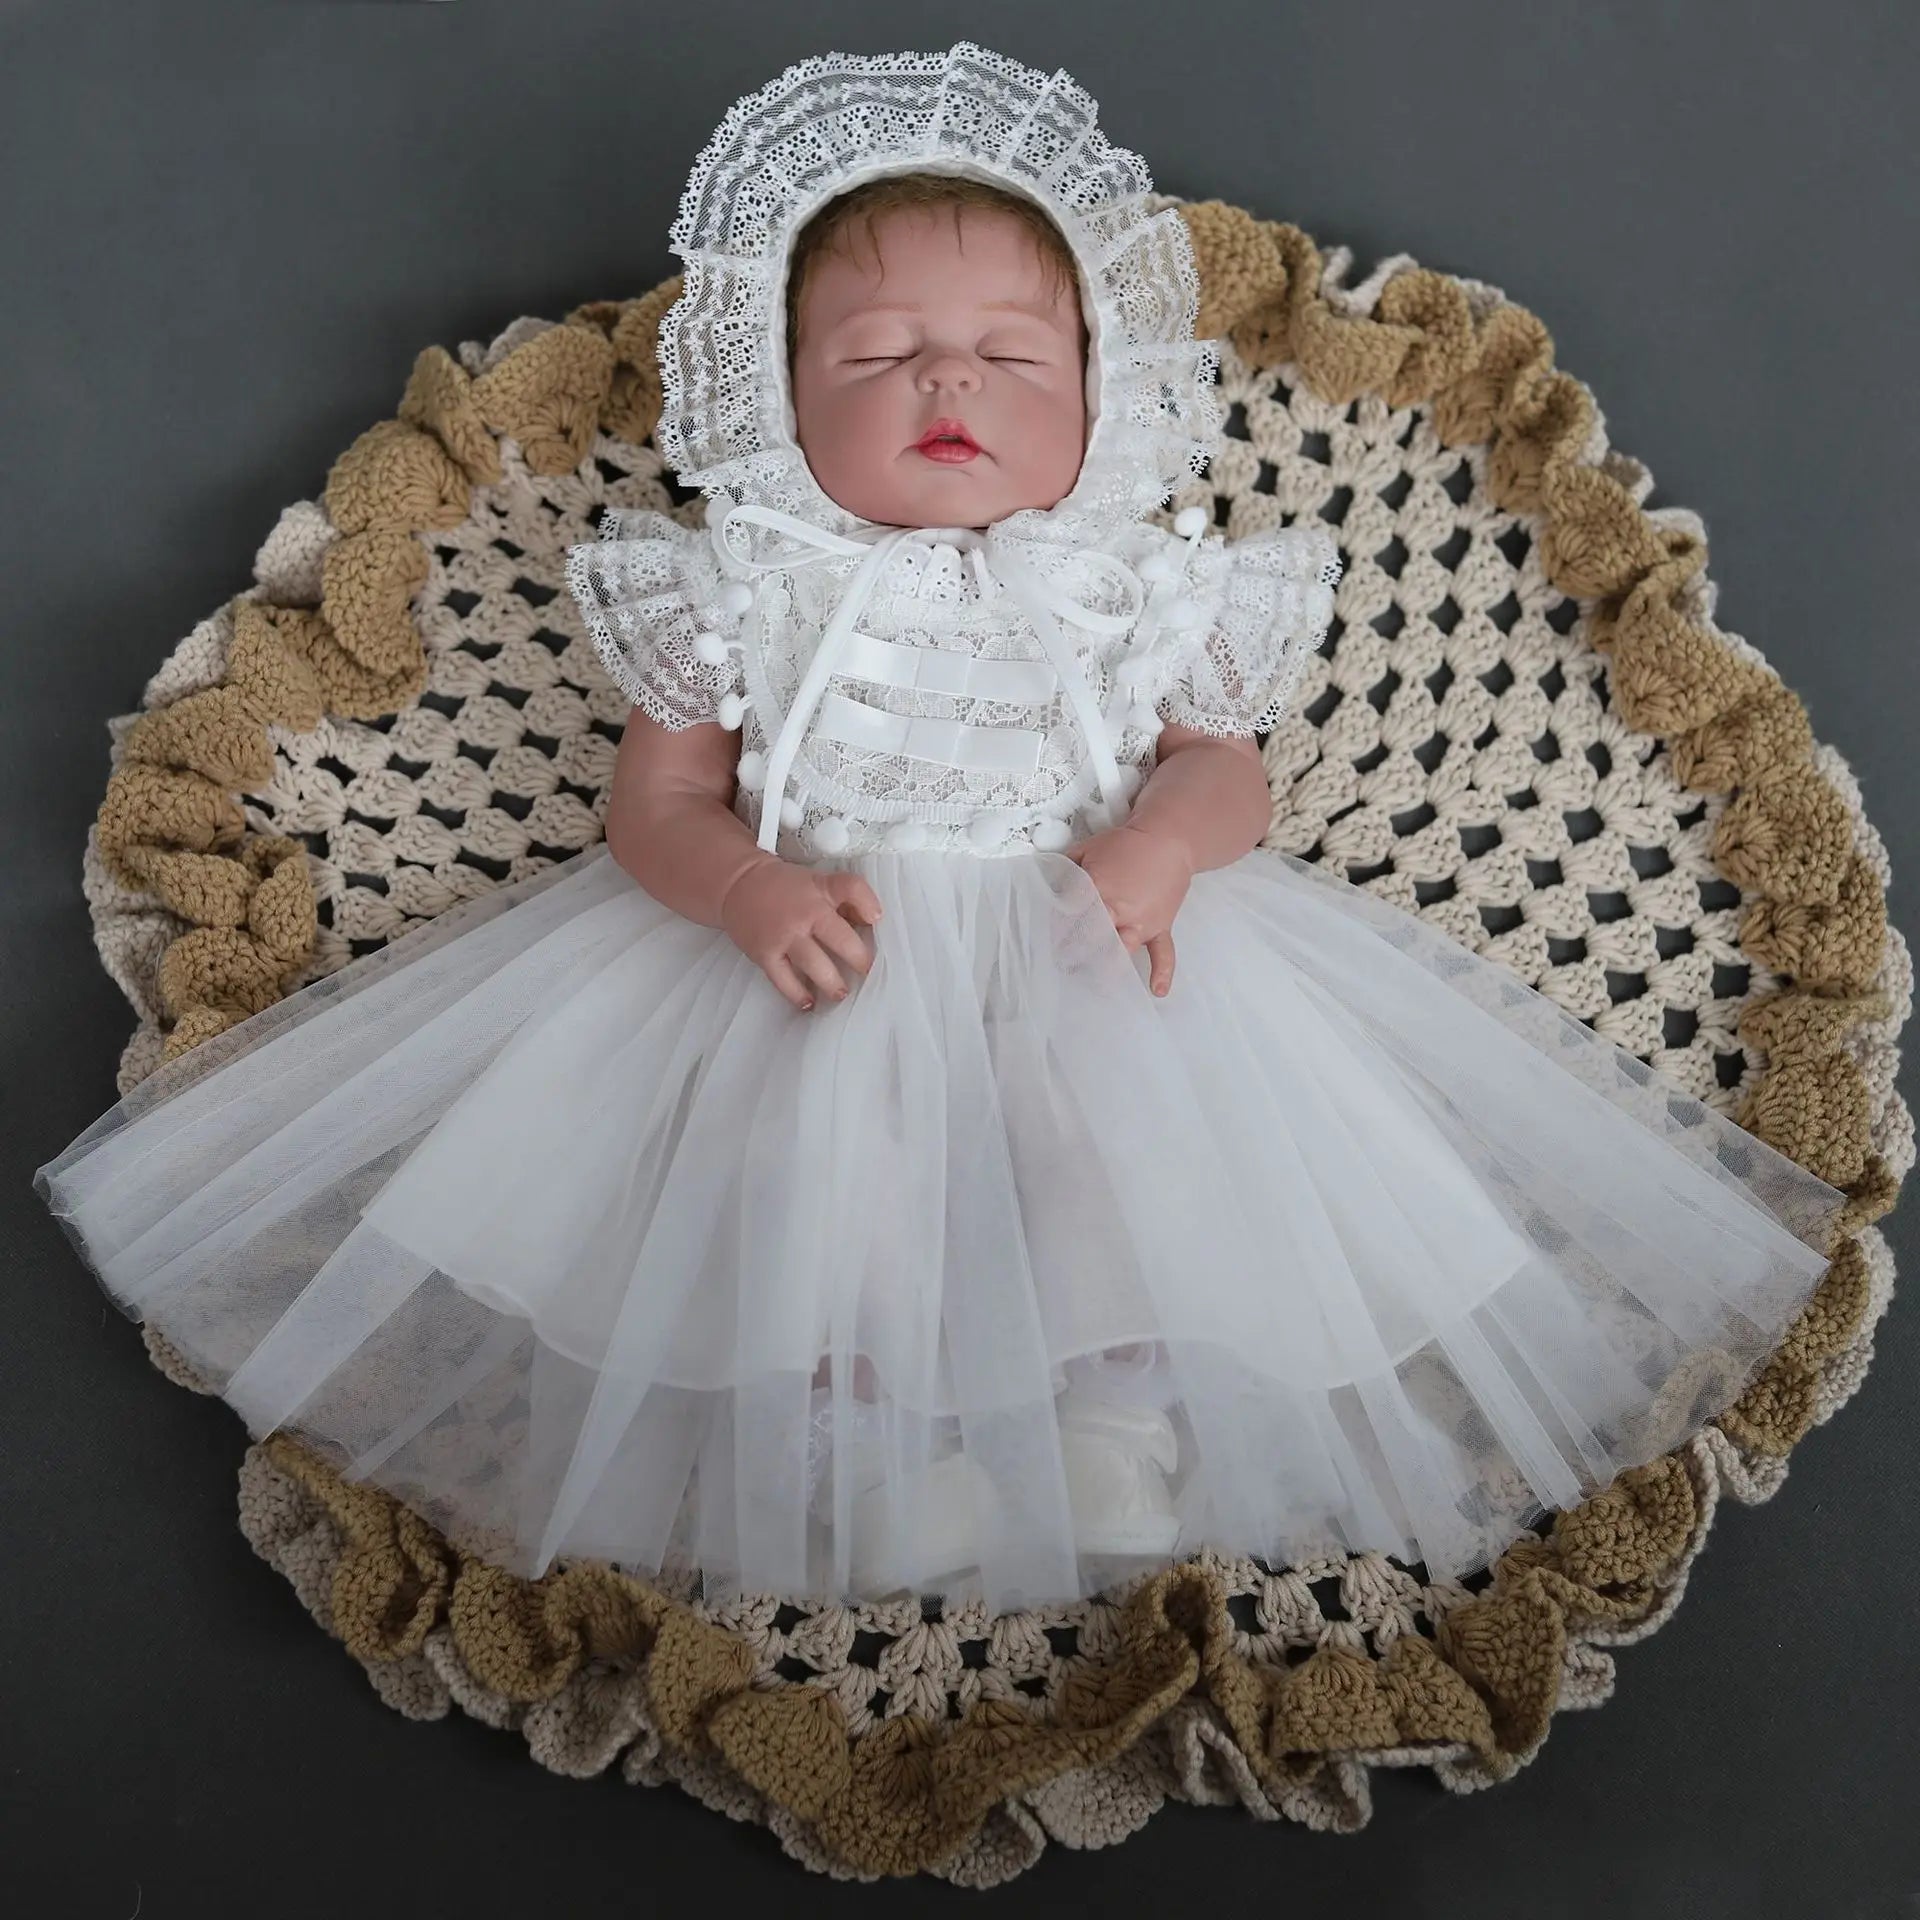 Ivory Toddler Baptism Dress 0-24M For Baby Girl by Baby Minaj Cruz